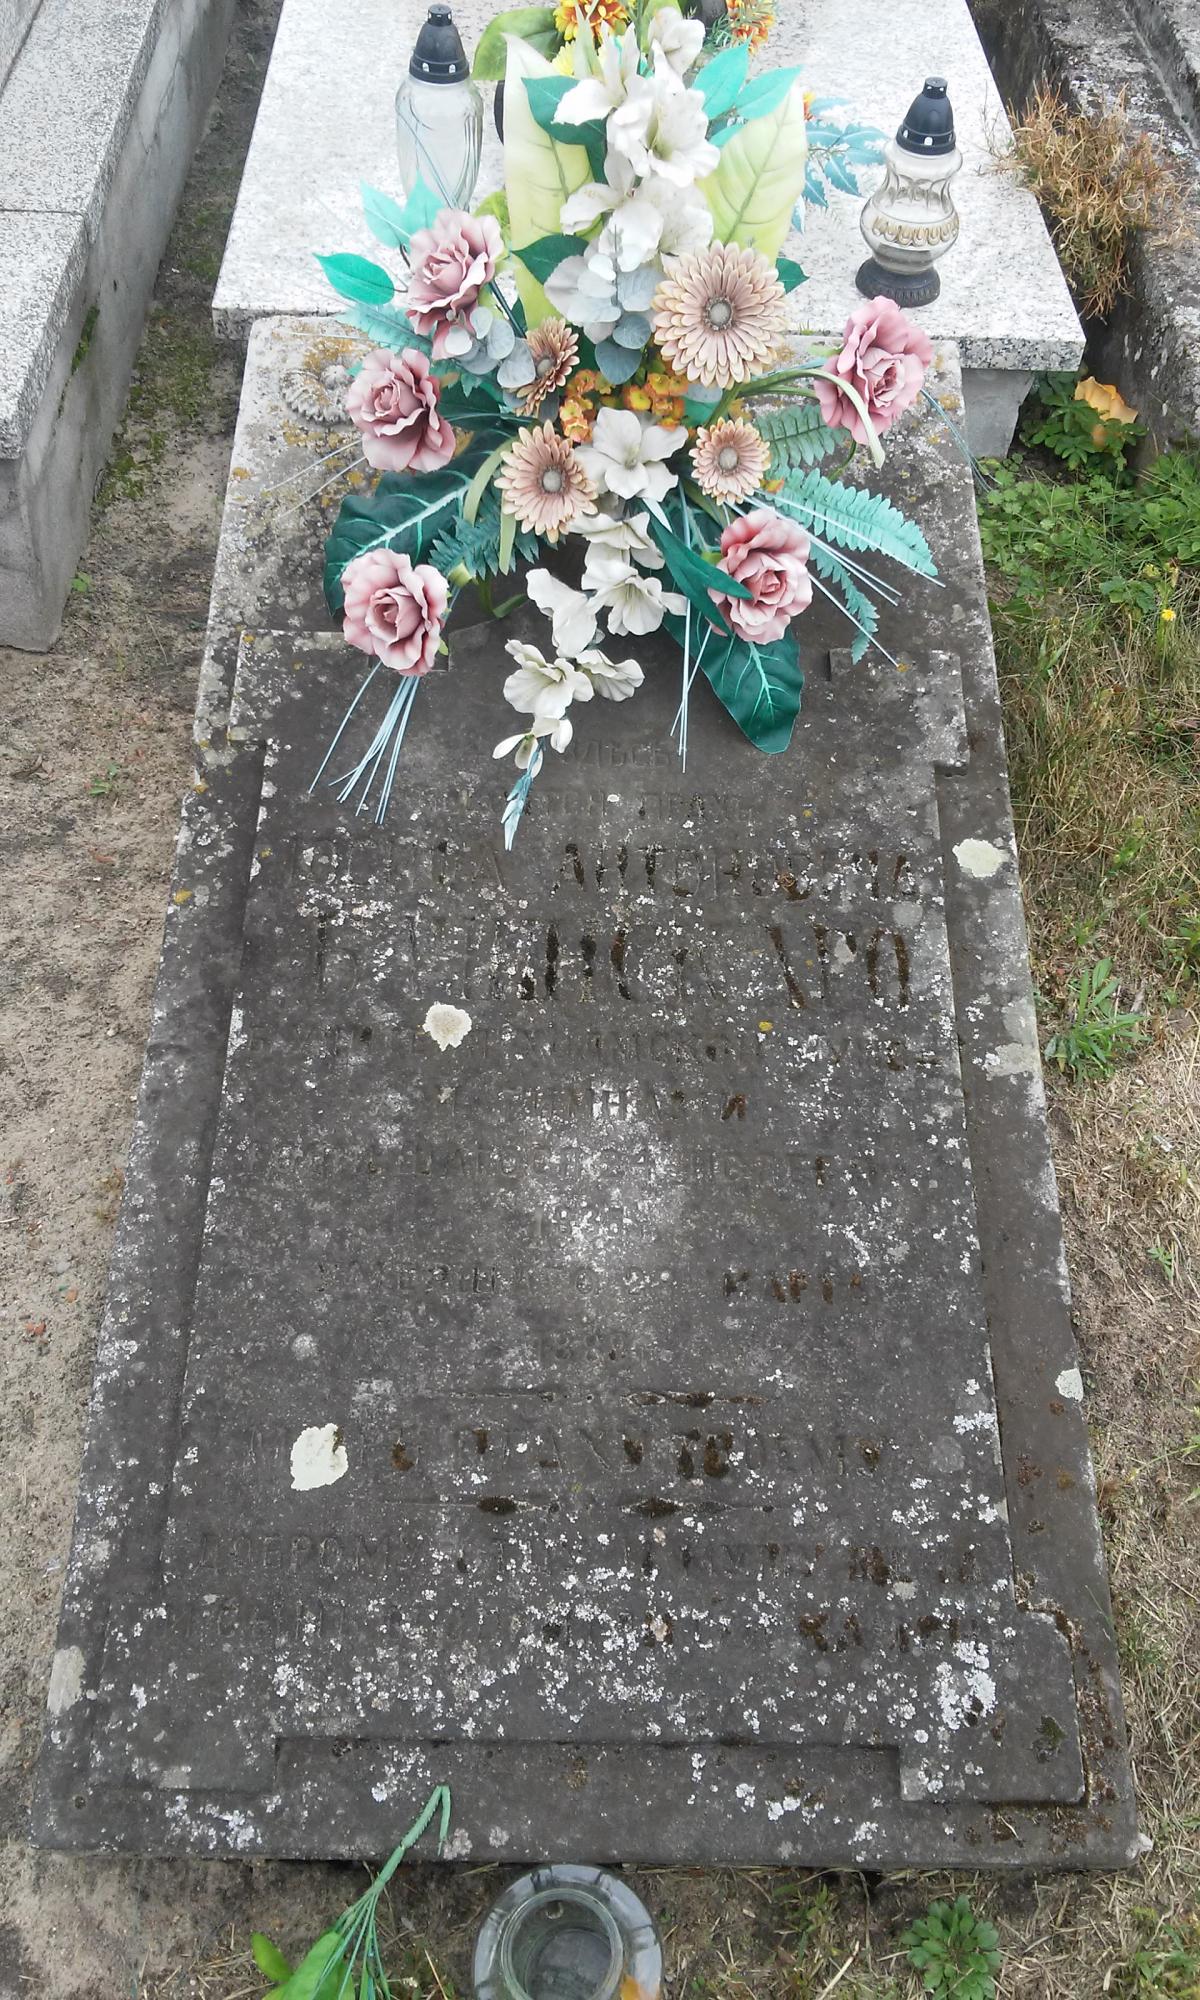 Wikipedia, Cemetery in Dubienka, Self-published work, Wikigrant WG 2015-39